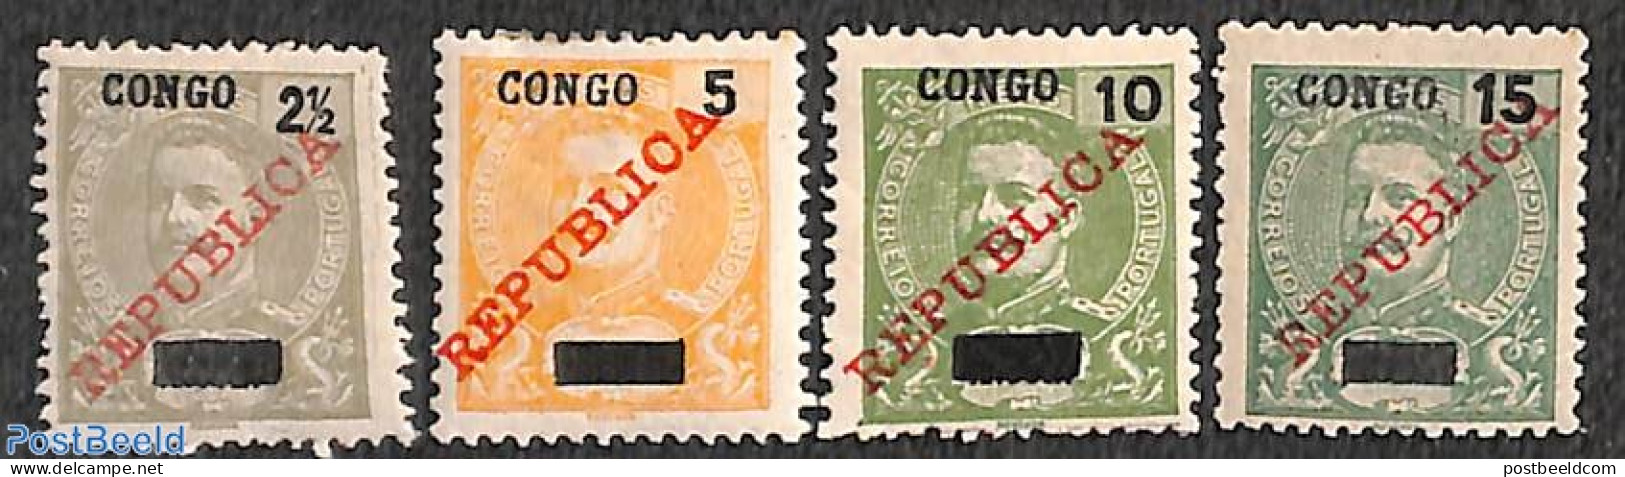 Angola 1911 Congo, REPUBLICA Overprints 4v, Unused (hinged) - Angola